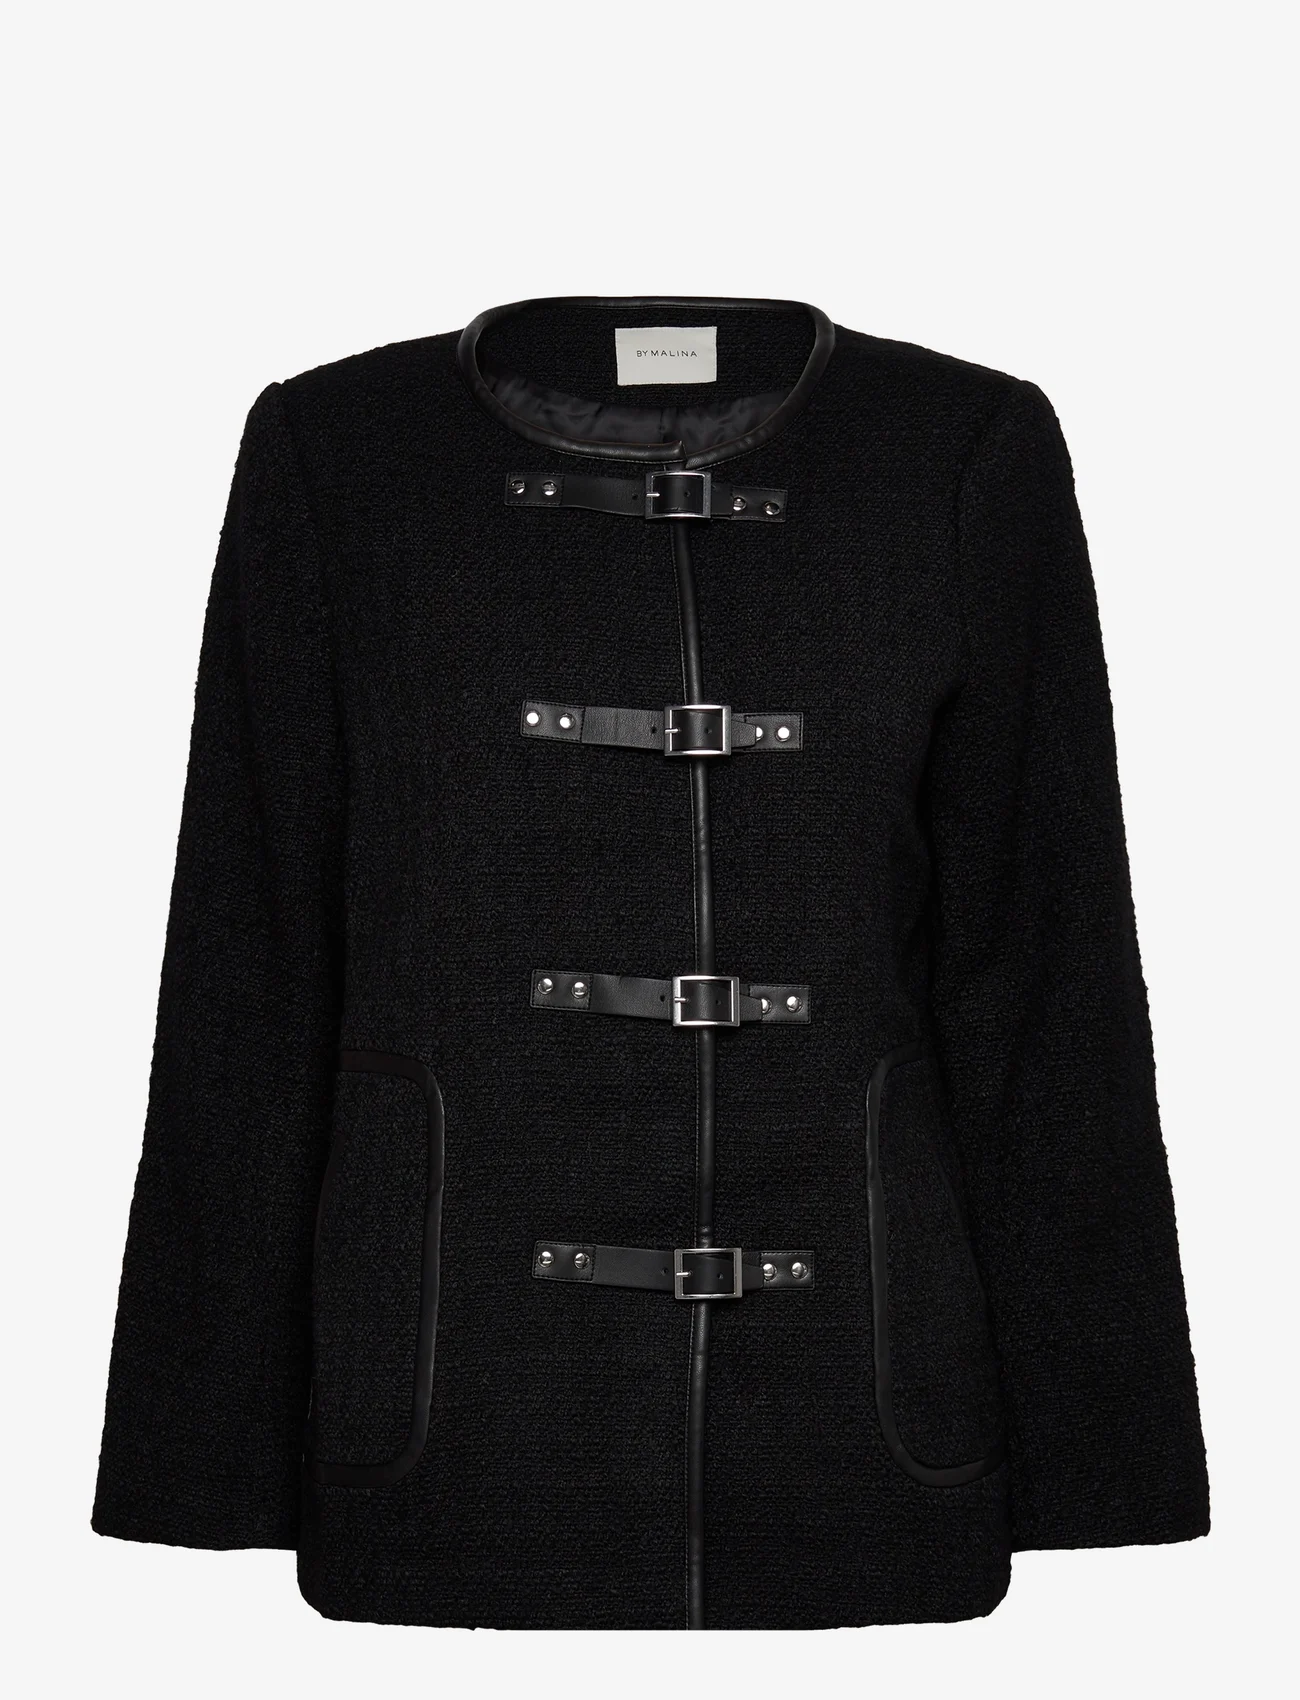 Malina - Malia boucle wool blend jacket - vinterjakker - black - 0